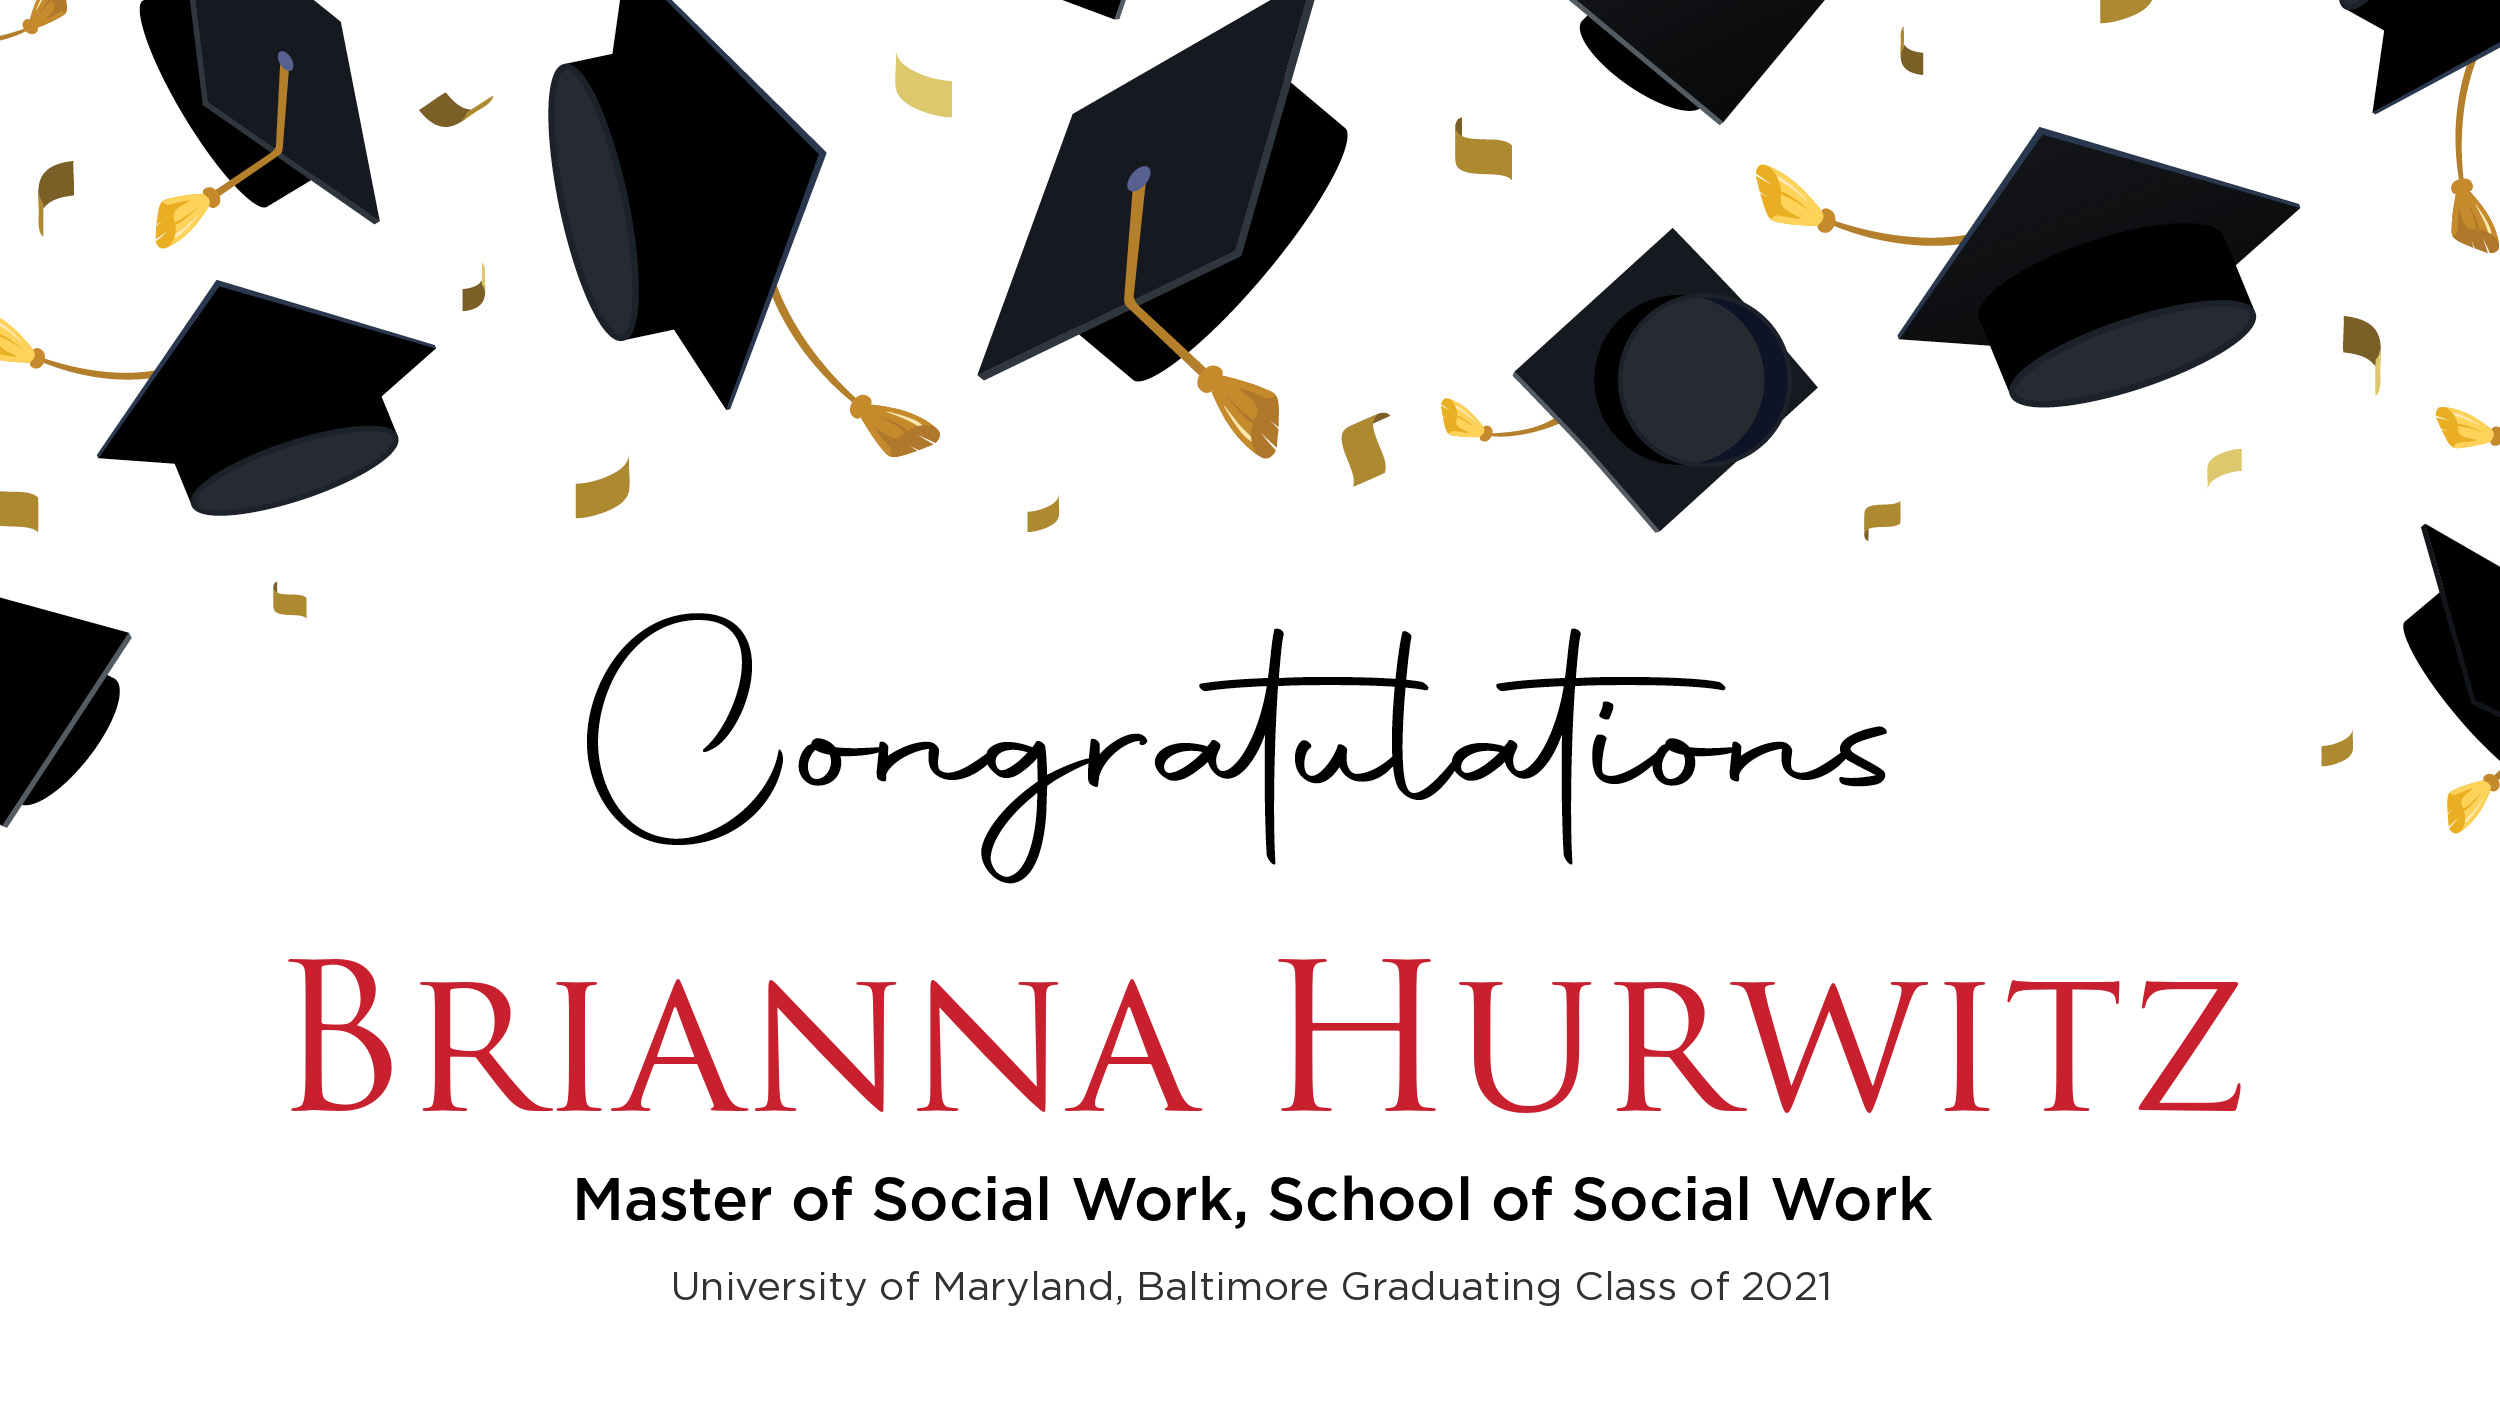 Congratulations Brianna Hurwitz, Master of Social Work